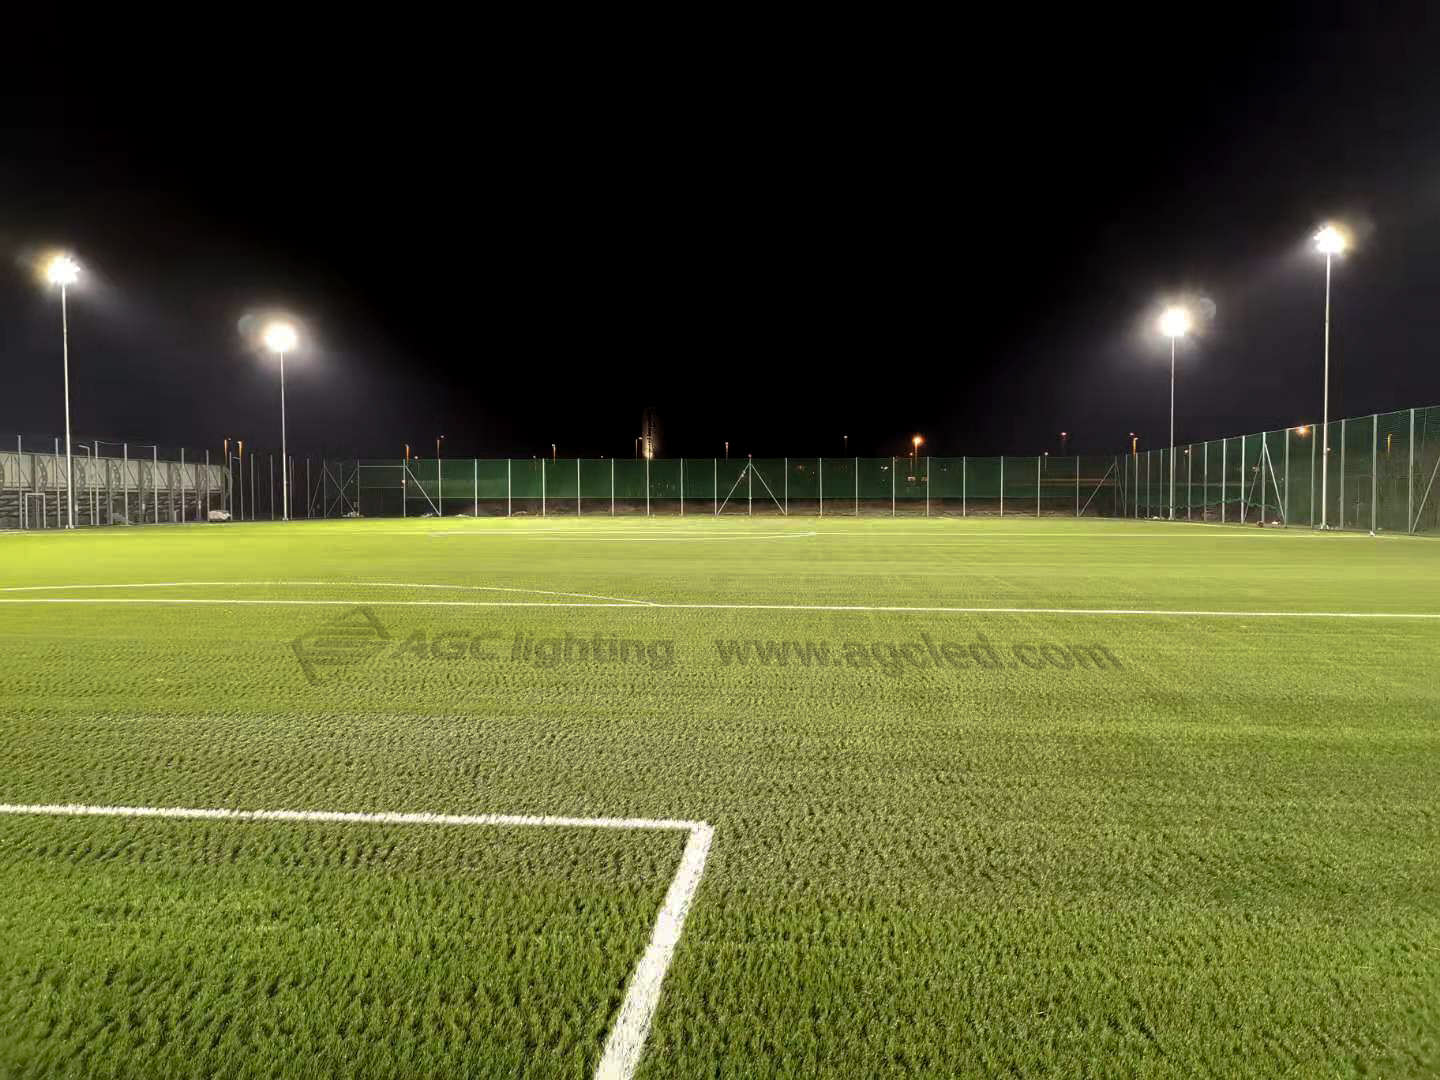 600w 5000K high bay light as flood light in football field